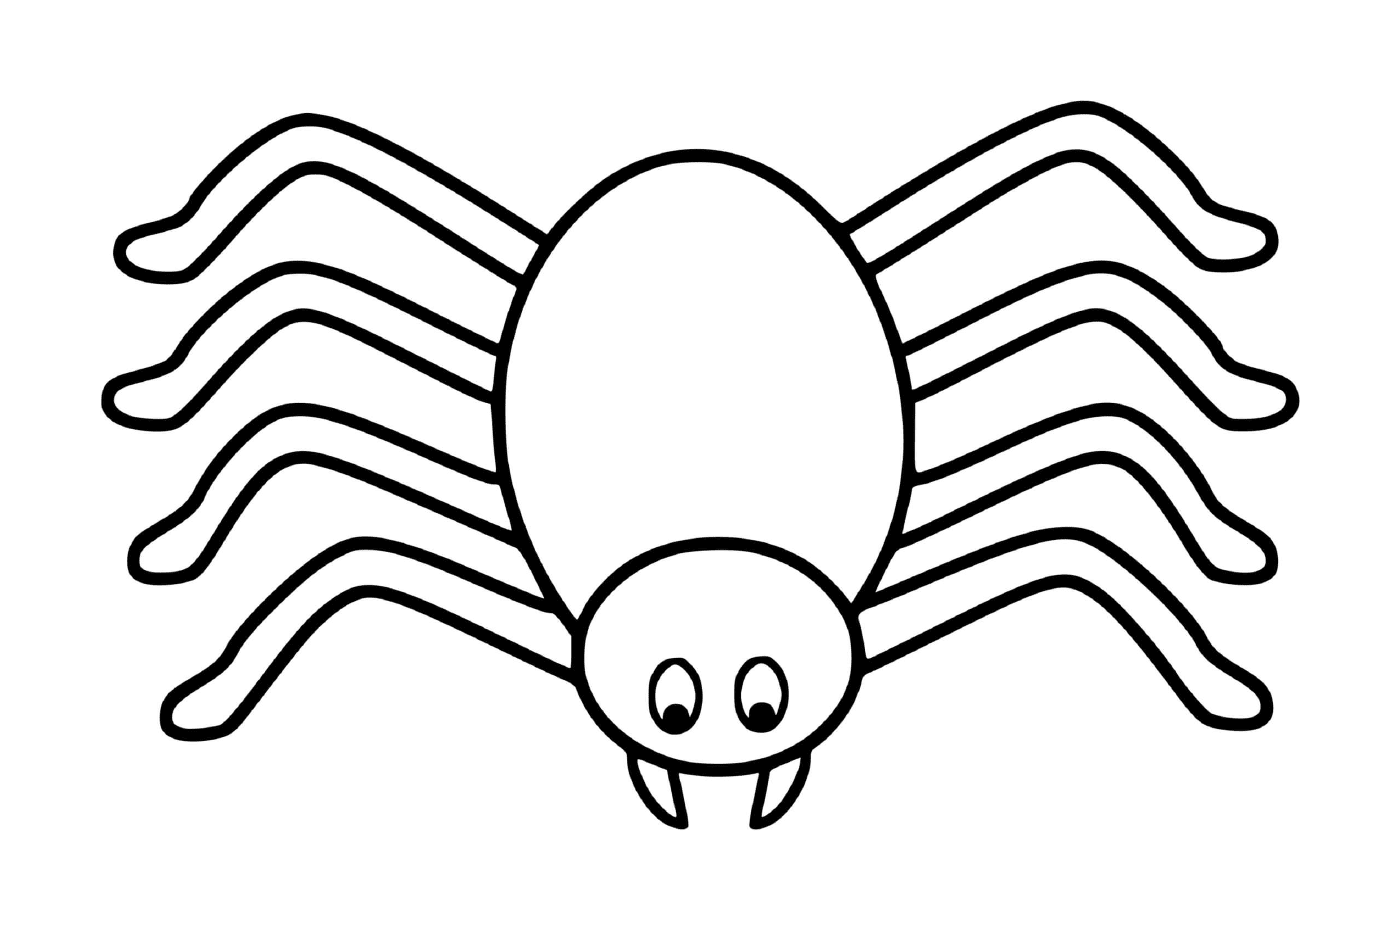   Une araignée simple et facile 